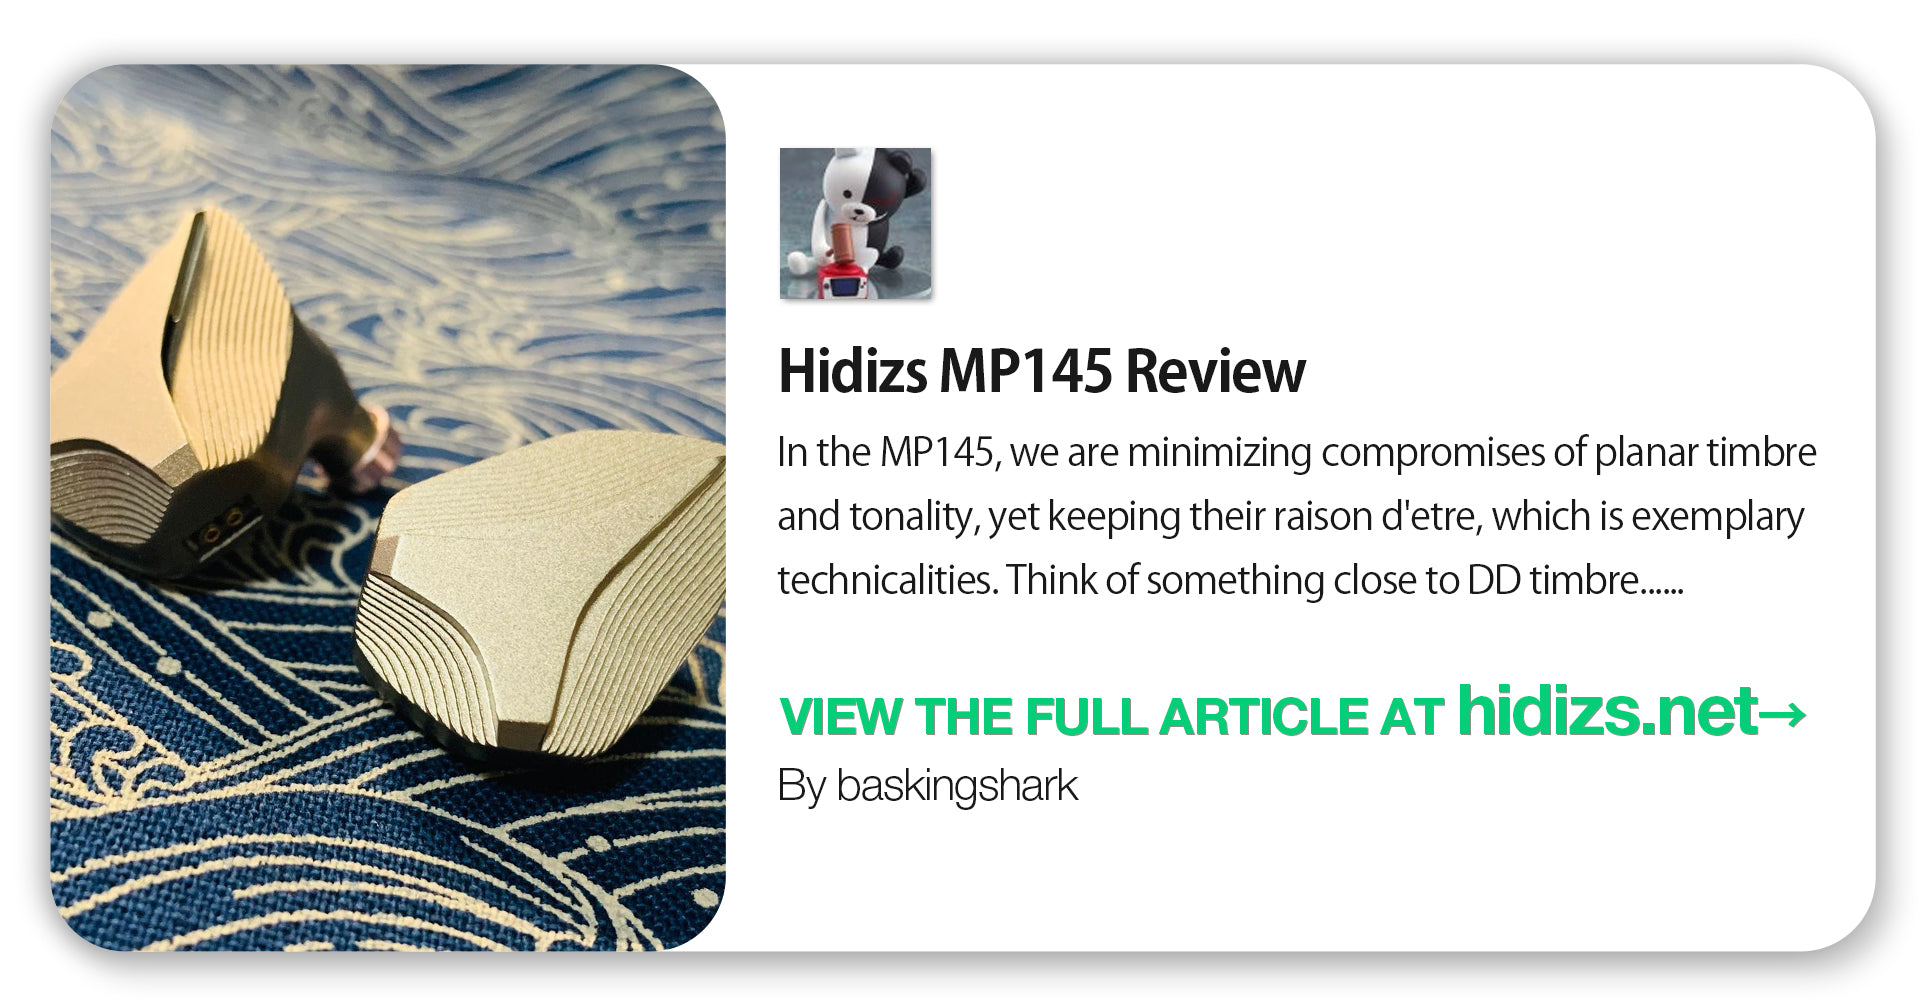 Hidizs MP145 Review - baskingshark